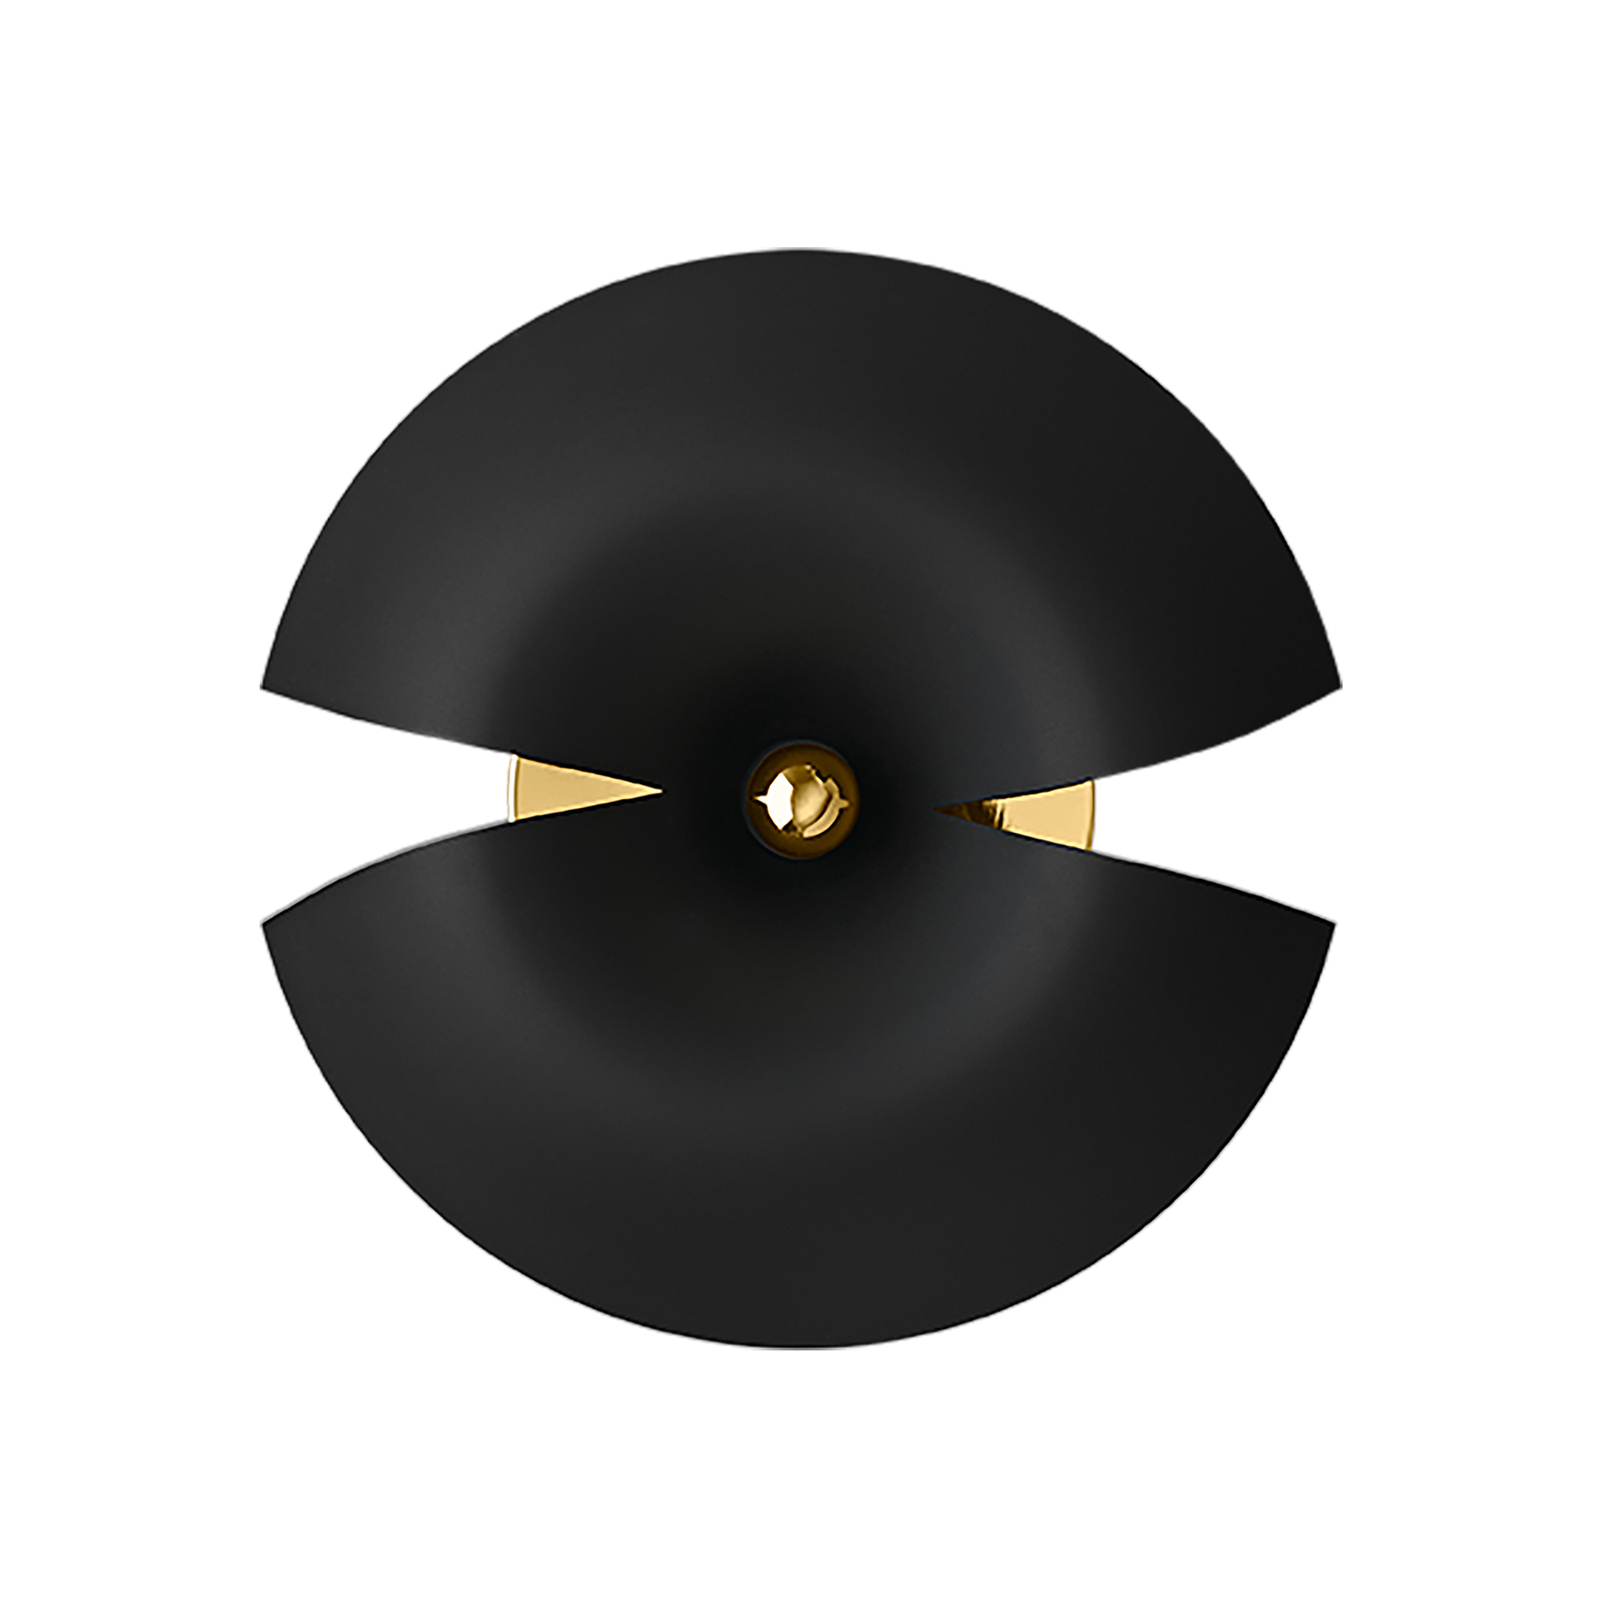 Nástěnné svítidlo AYTM Cycnus, černé, Ø 45 cm, zástrčka, hliník, E27